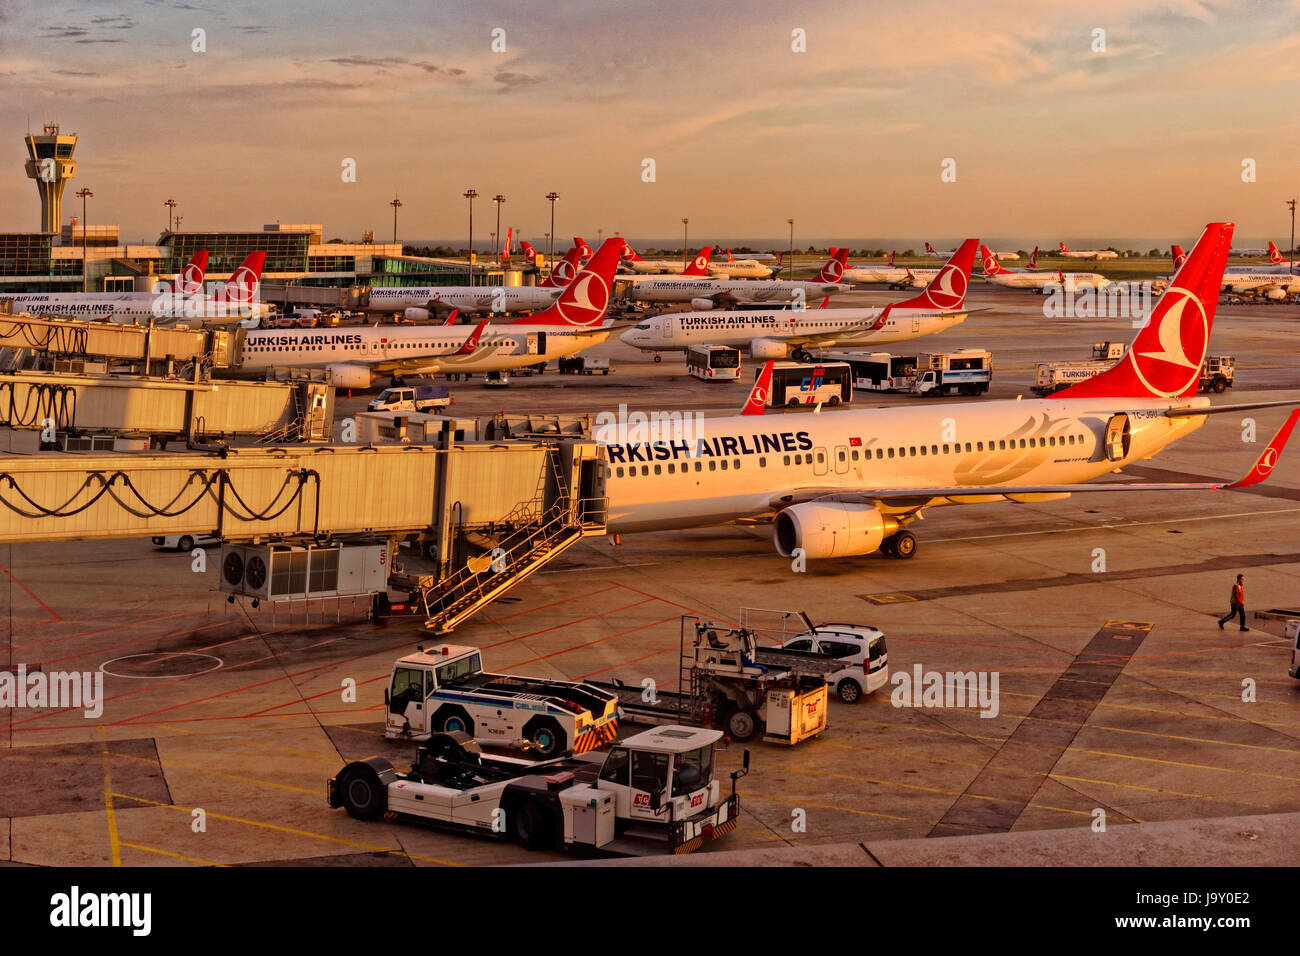 Aria lato-Turkish Airlines hub all'aeroporto Istanbul Ataturk, Turchia. Foto Stock